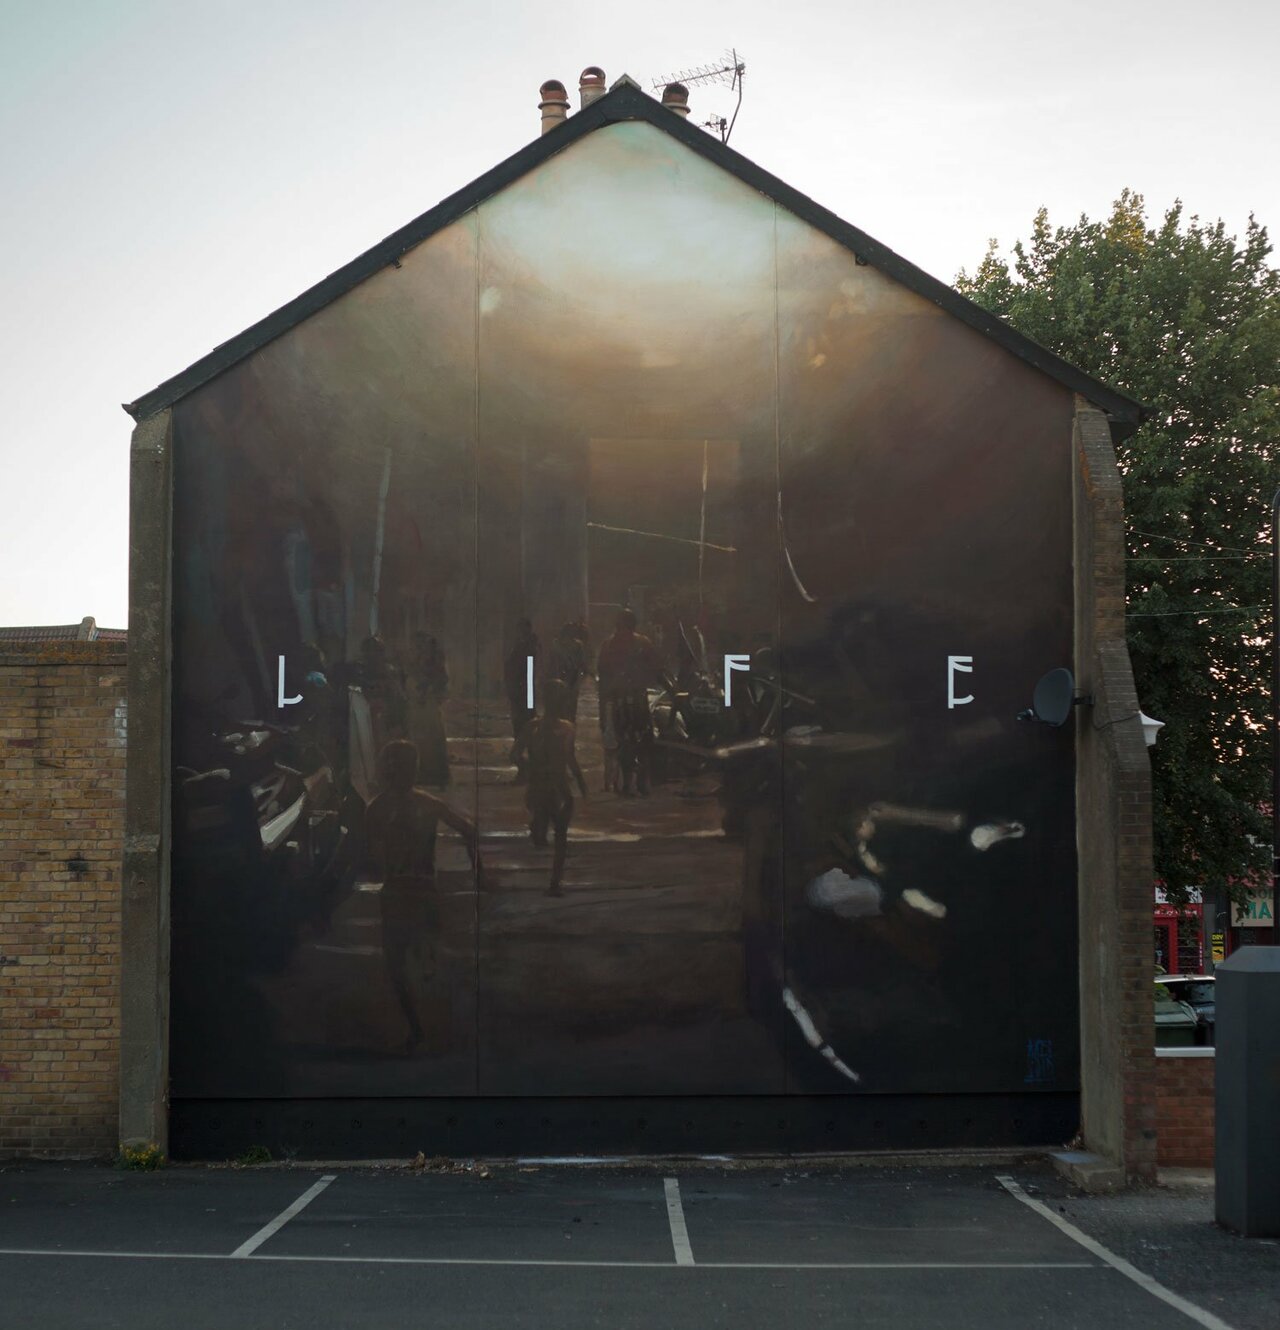 “Life” by Axel Void in London #streetart https://streetartnews.net/2016/09/life-by-axel-void-in-london.html https://t.co/O4u10GnTfX